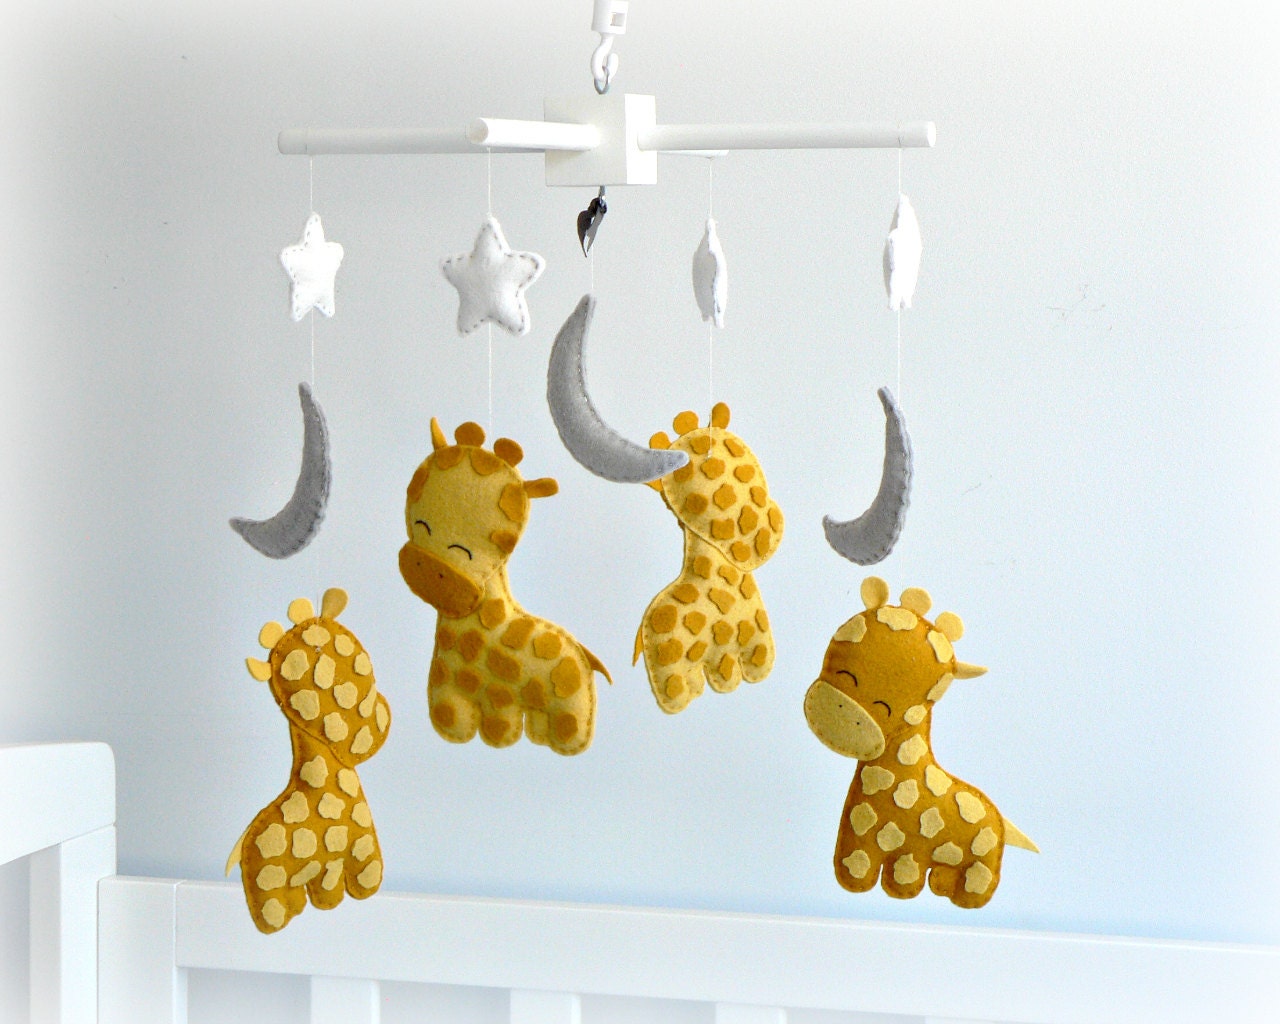 Giraffe baby mobile - nursery decor - You pick your colors - custom made - stars, moons, sleepy giraffes - LullabyMobiles